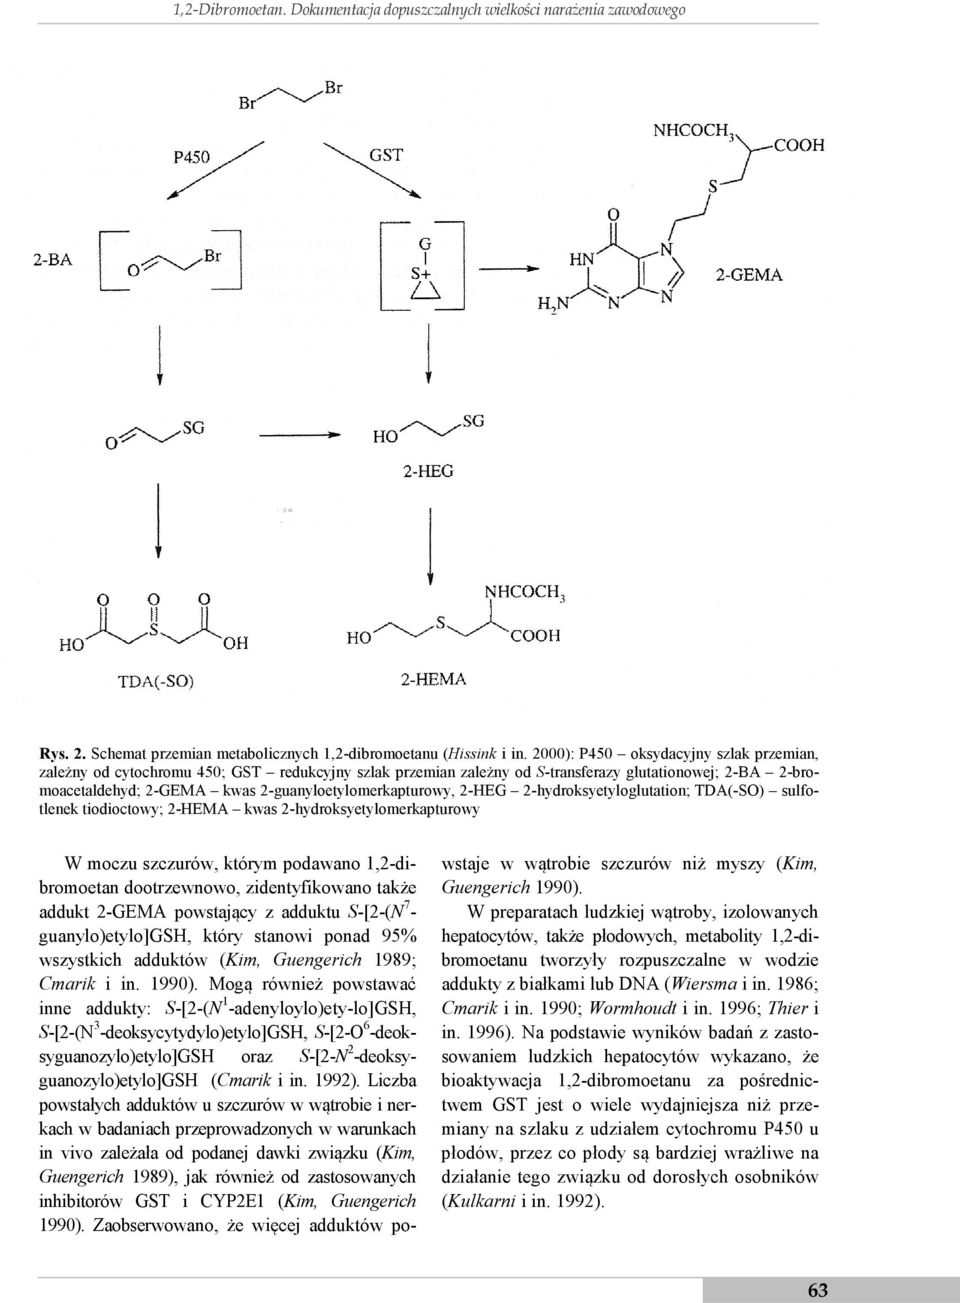 2-guanyloetylomerkapturowy, 2-HEG 2-hydroksyetyloglutation; TDA(-SO) sulfotlenek tiodioctowy; 2-HEMA kwas 2-hydroksyetylomerkapturowy W moczu szczurów, którym podawano 1,2-dibromoetan dootrzewnowo,